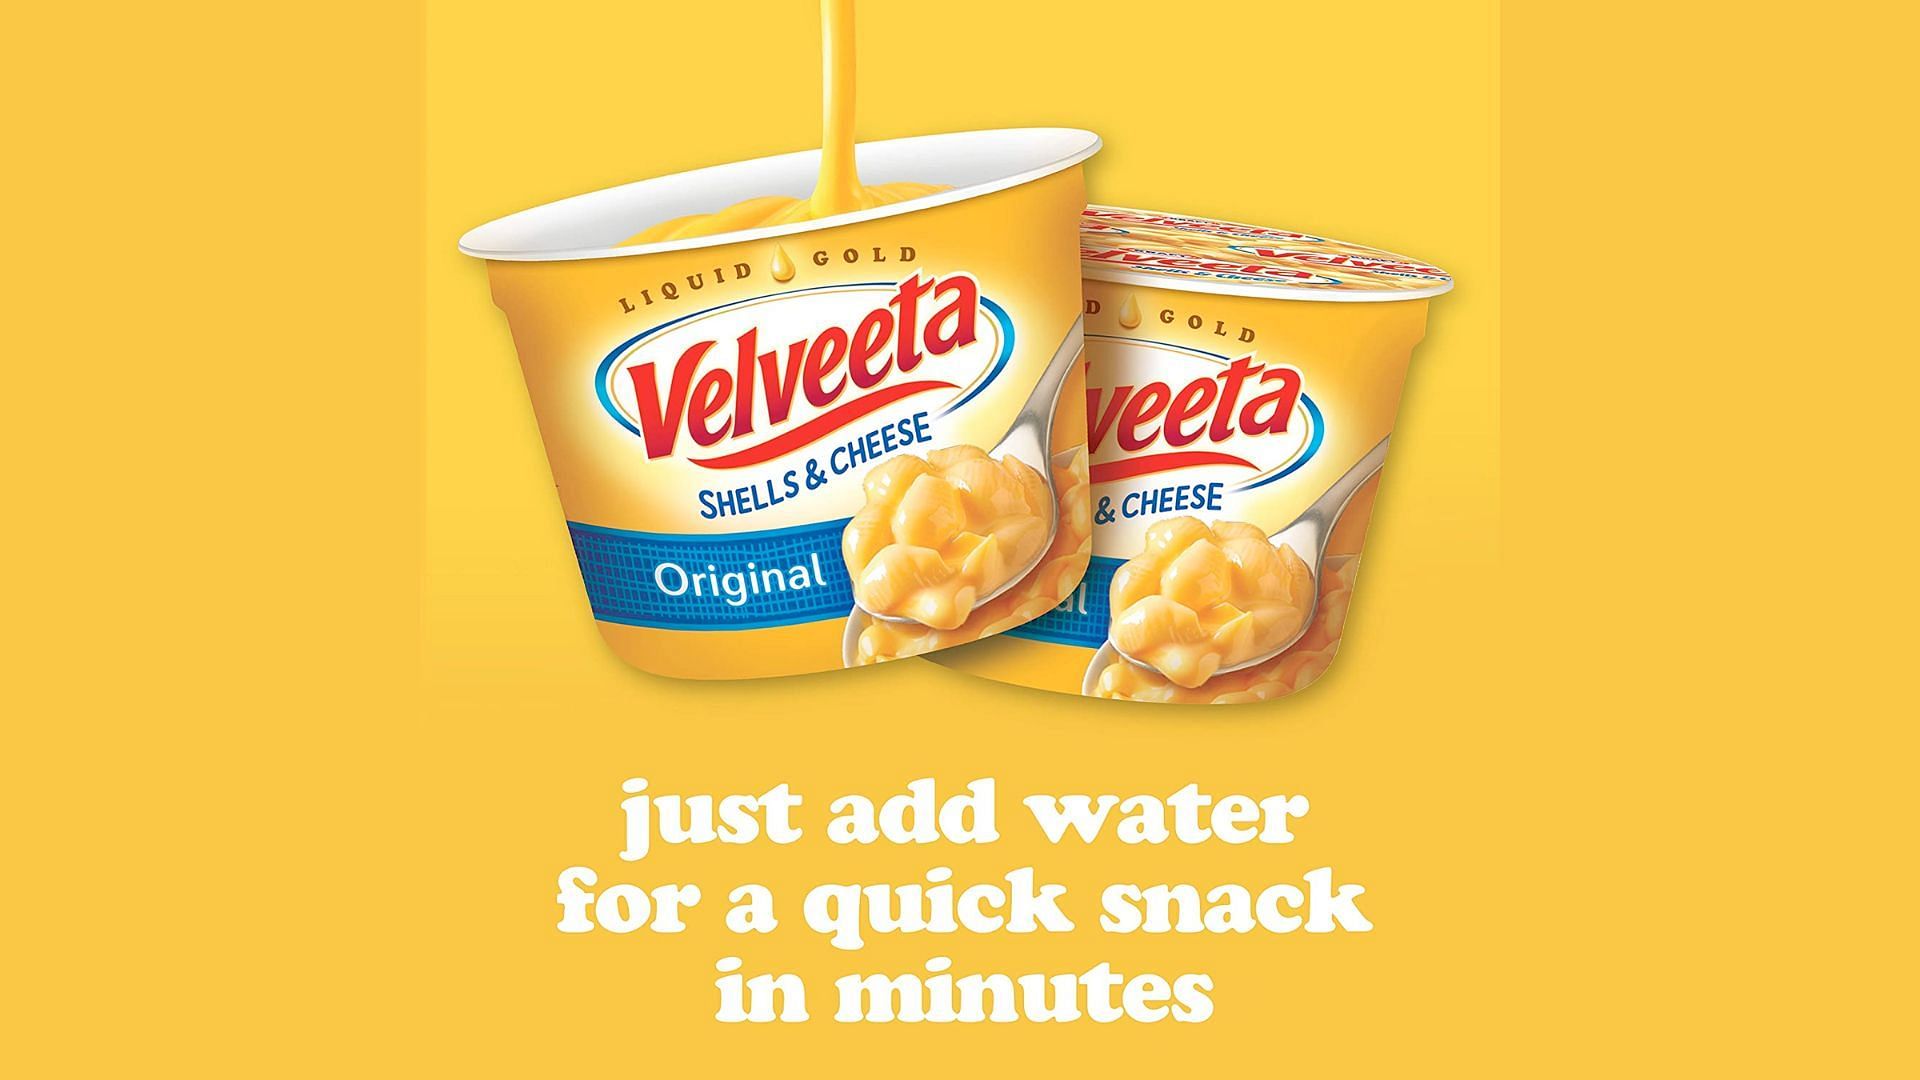 The company promises quick, ready-to-eat food (image via Velveeta.com)